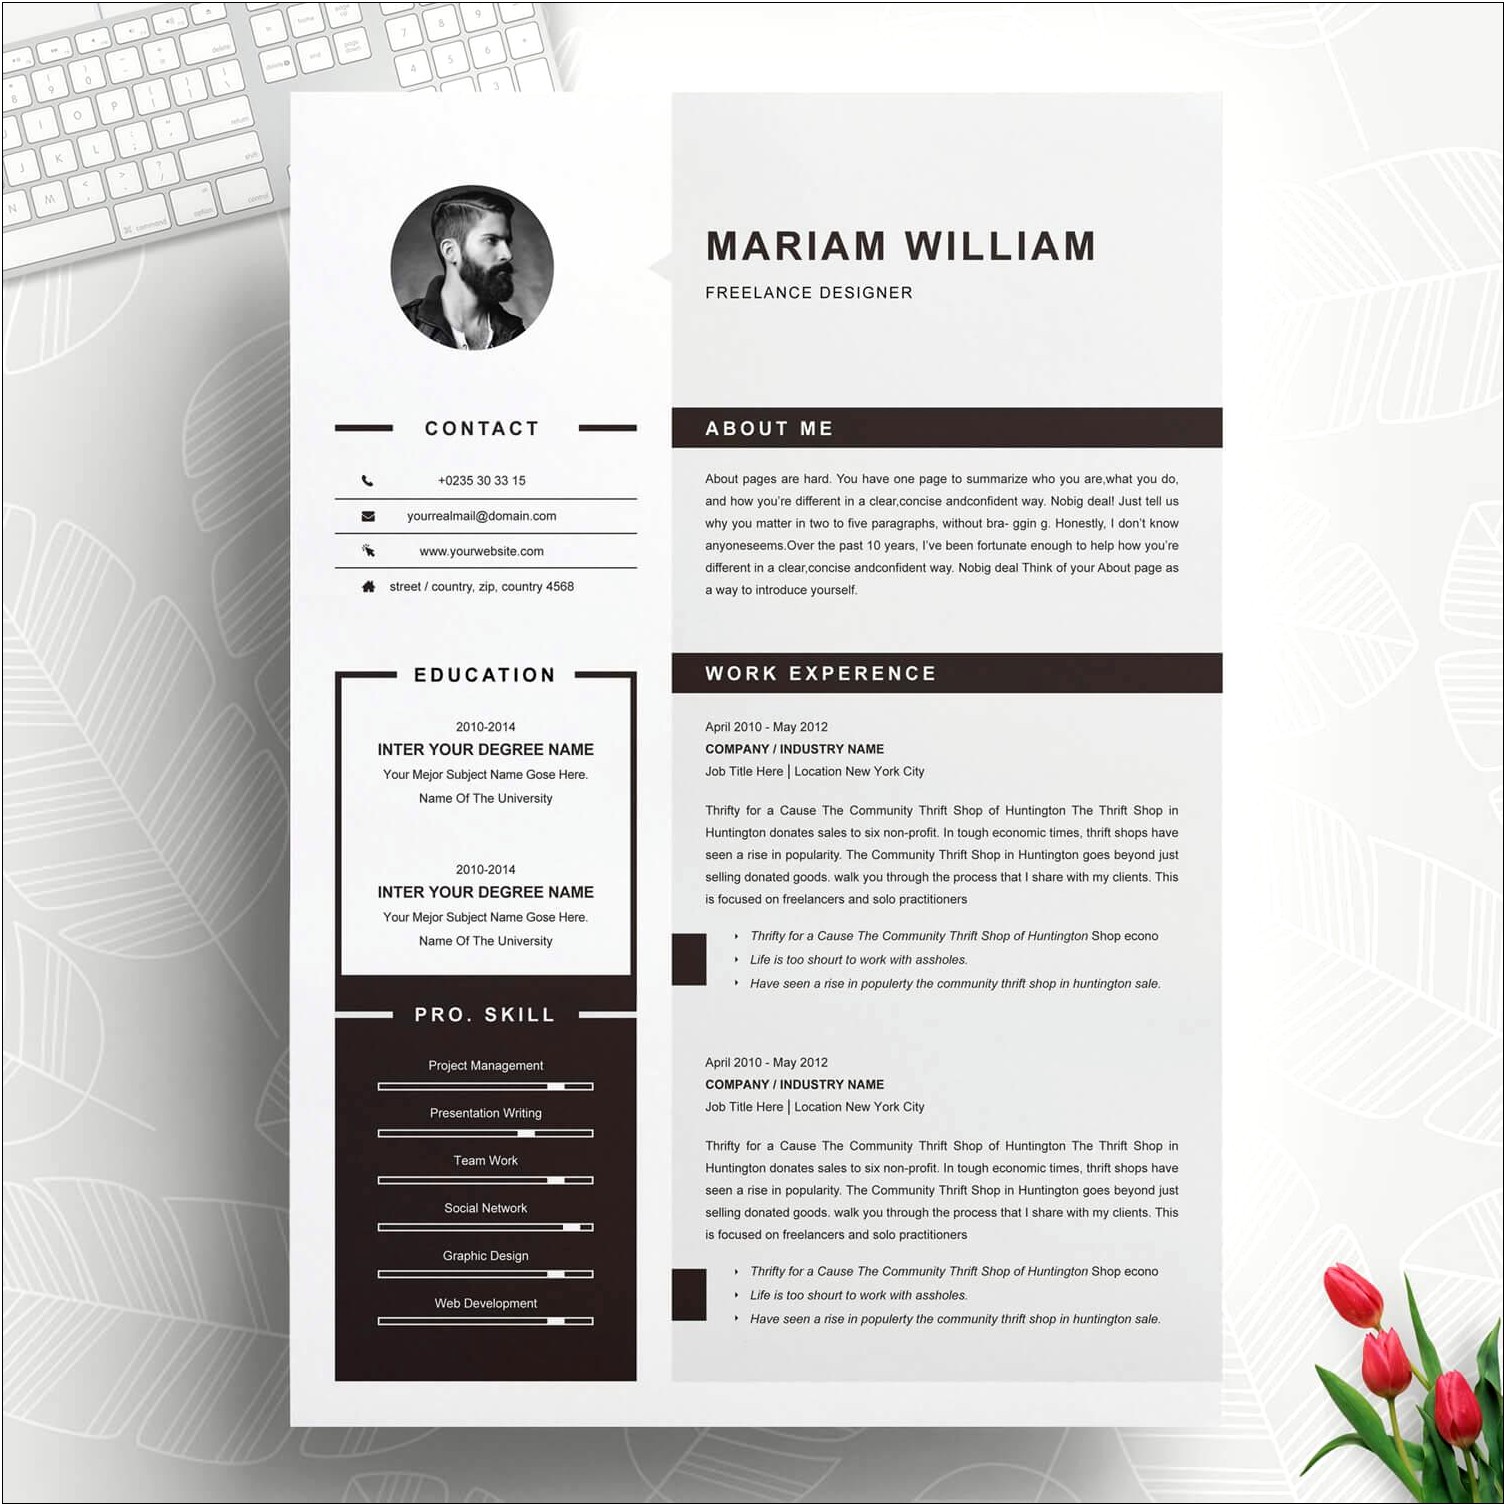 Freelance Resume Samples Graphic Design